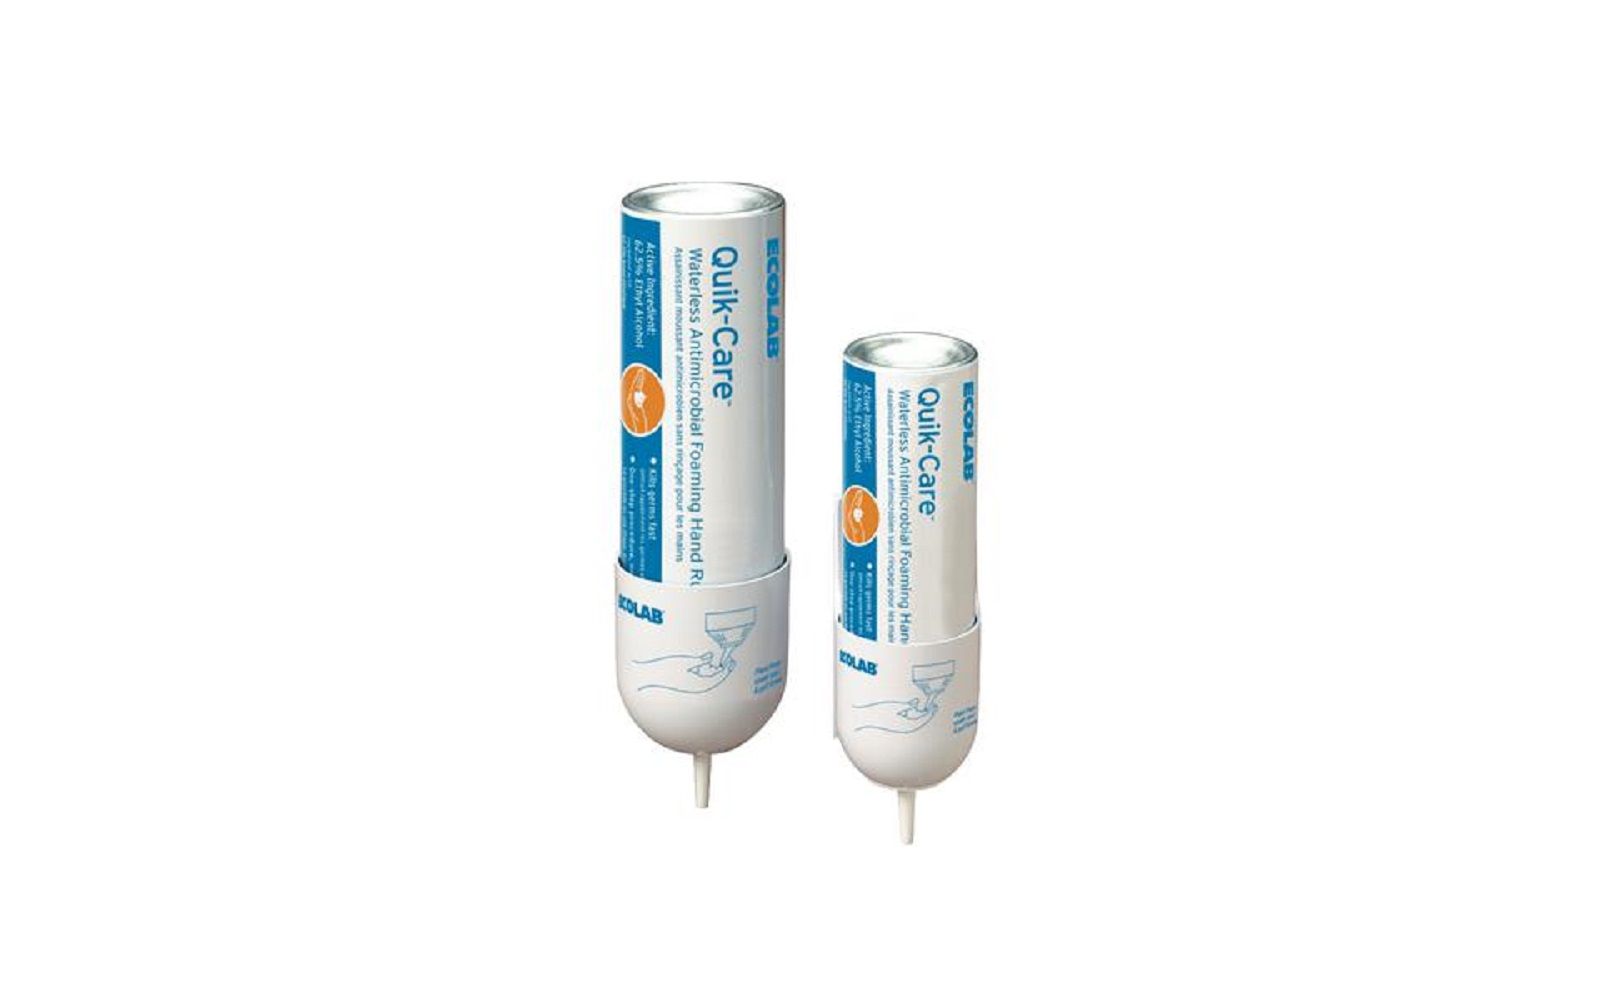 Quik-care™ waterless foam sanitizer holder - 7 oz